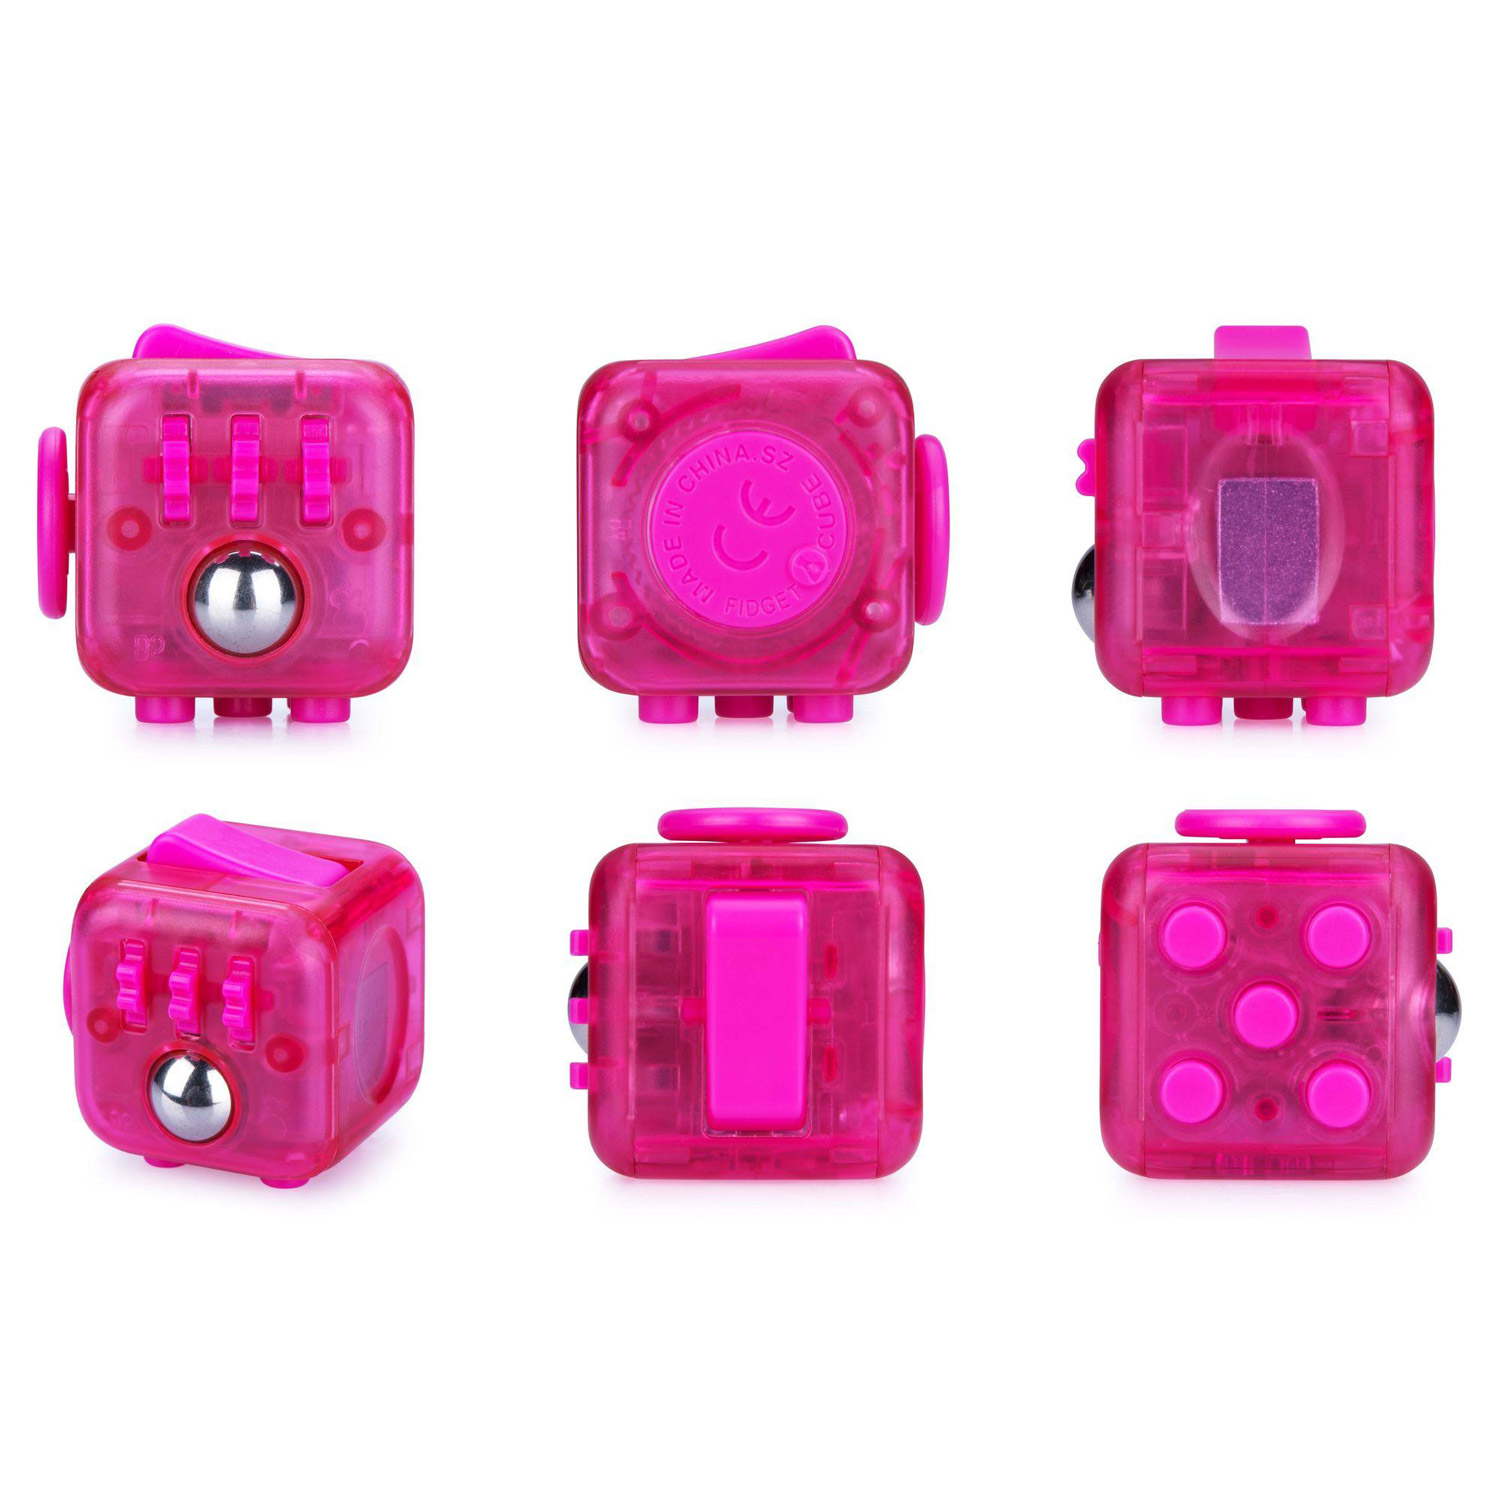 Fidget Original Cube (2pk pink) by ZURU